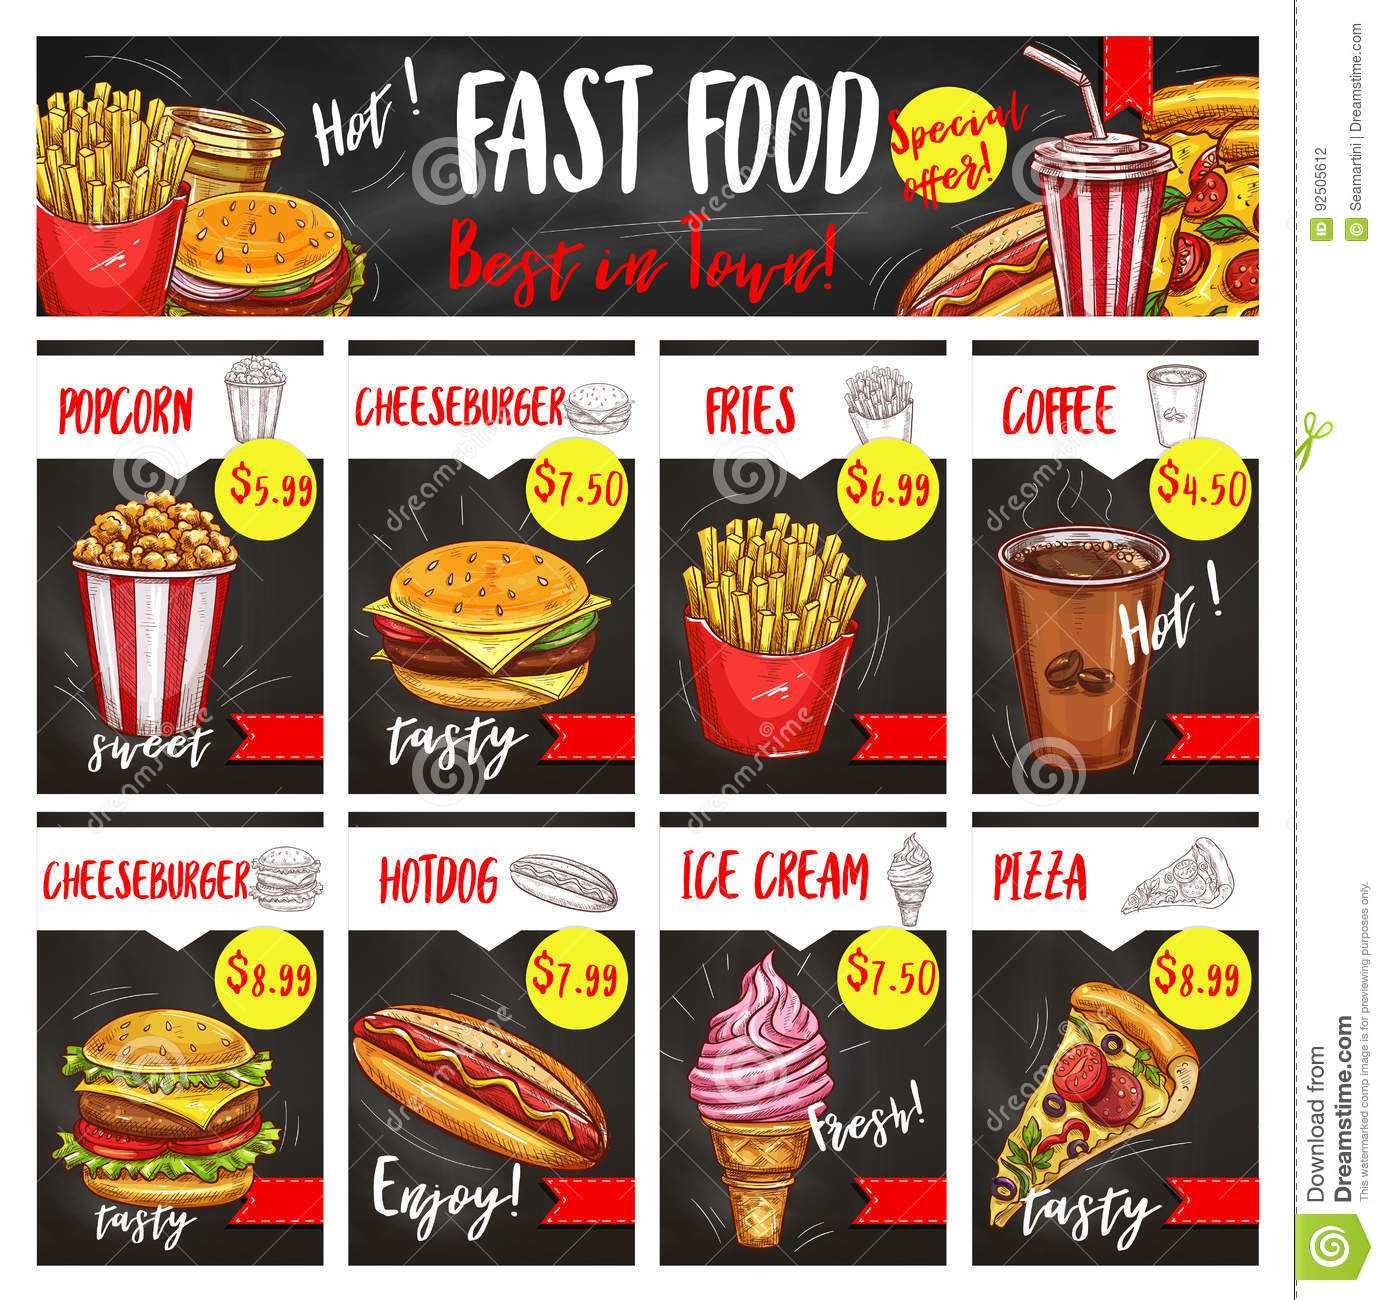 Fast Food Restaurant Menu Board Template Design Stock Vector In Fast Food Menu Design Templates